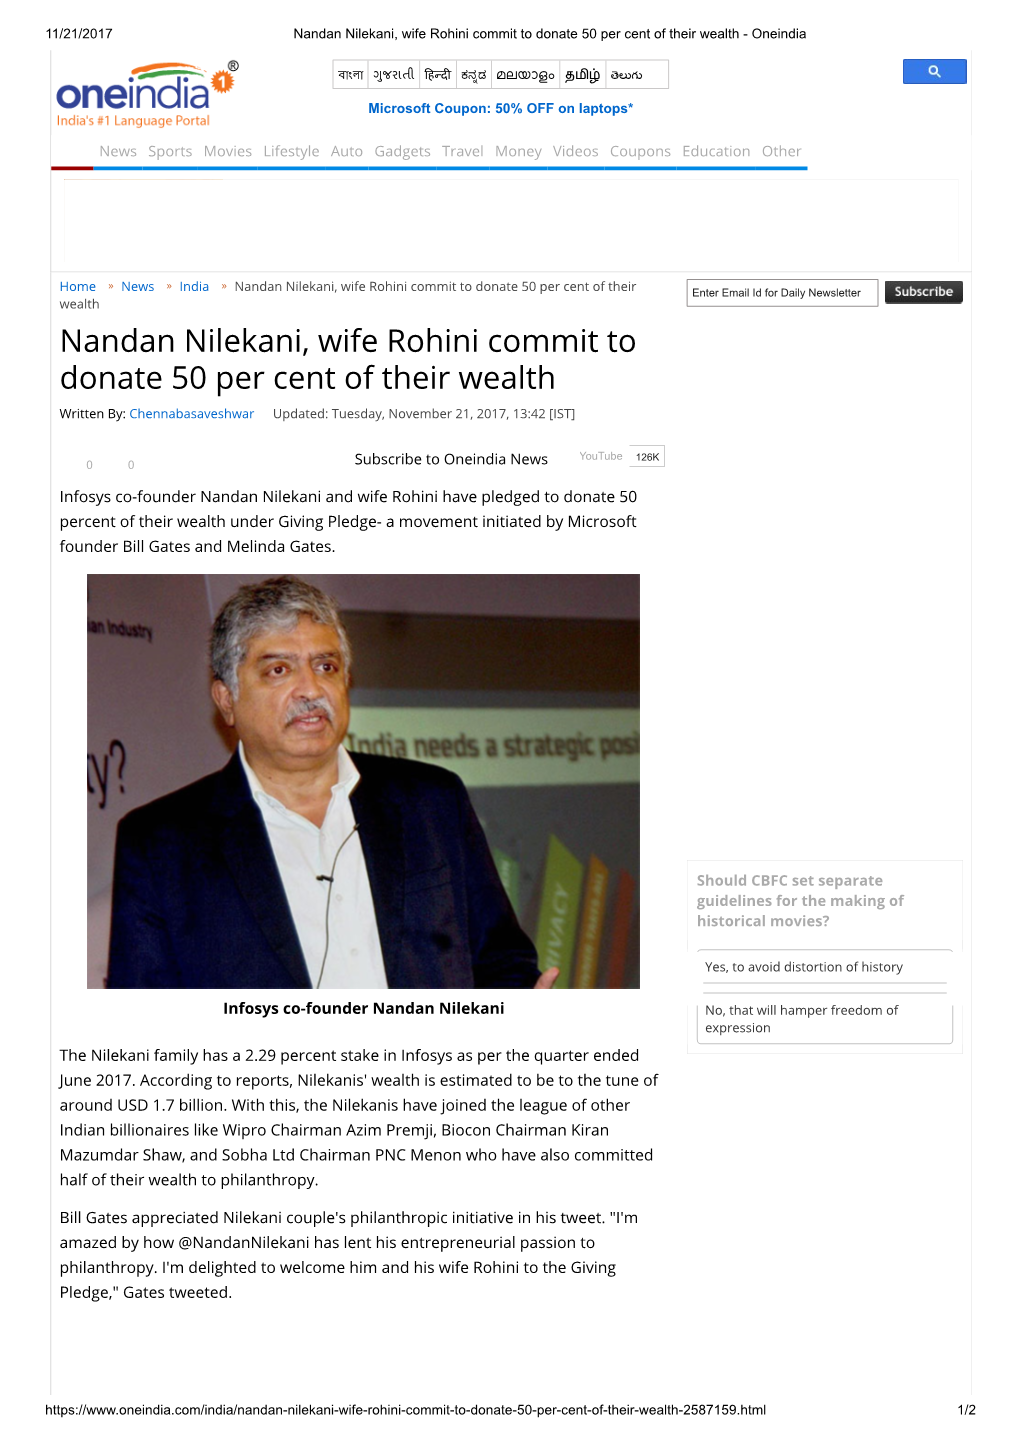 Nandan Nilekani, Wife Rohini Commit to Donate 50 Per Cent of Their Wealth - Oneindia